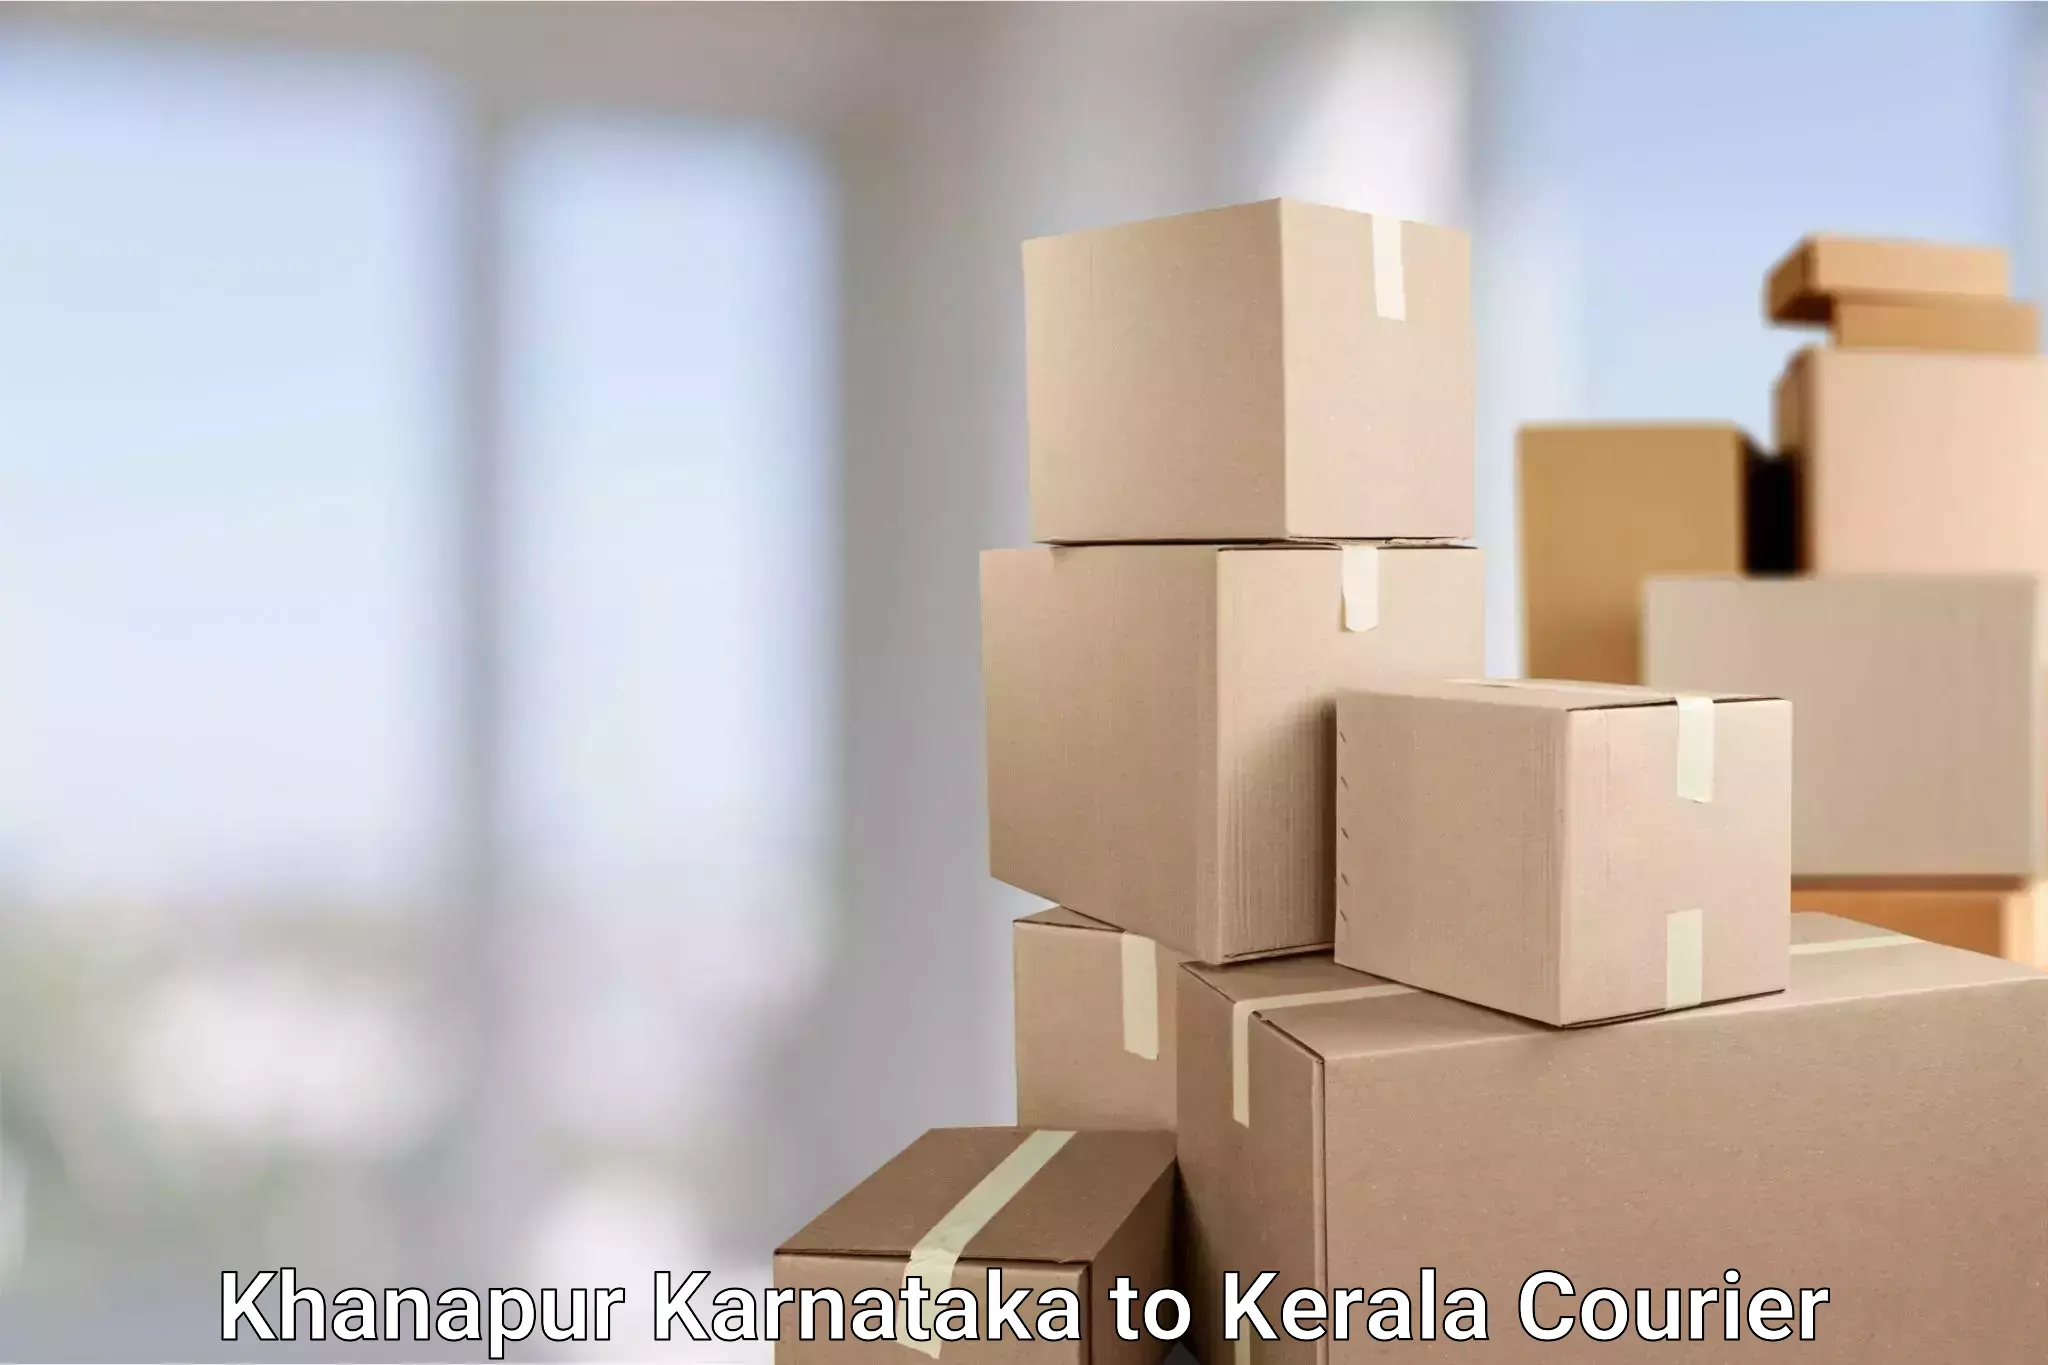 On-call courier service Khanapur Karnataka to Kerala